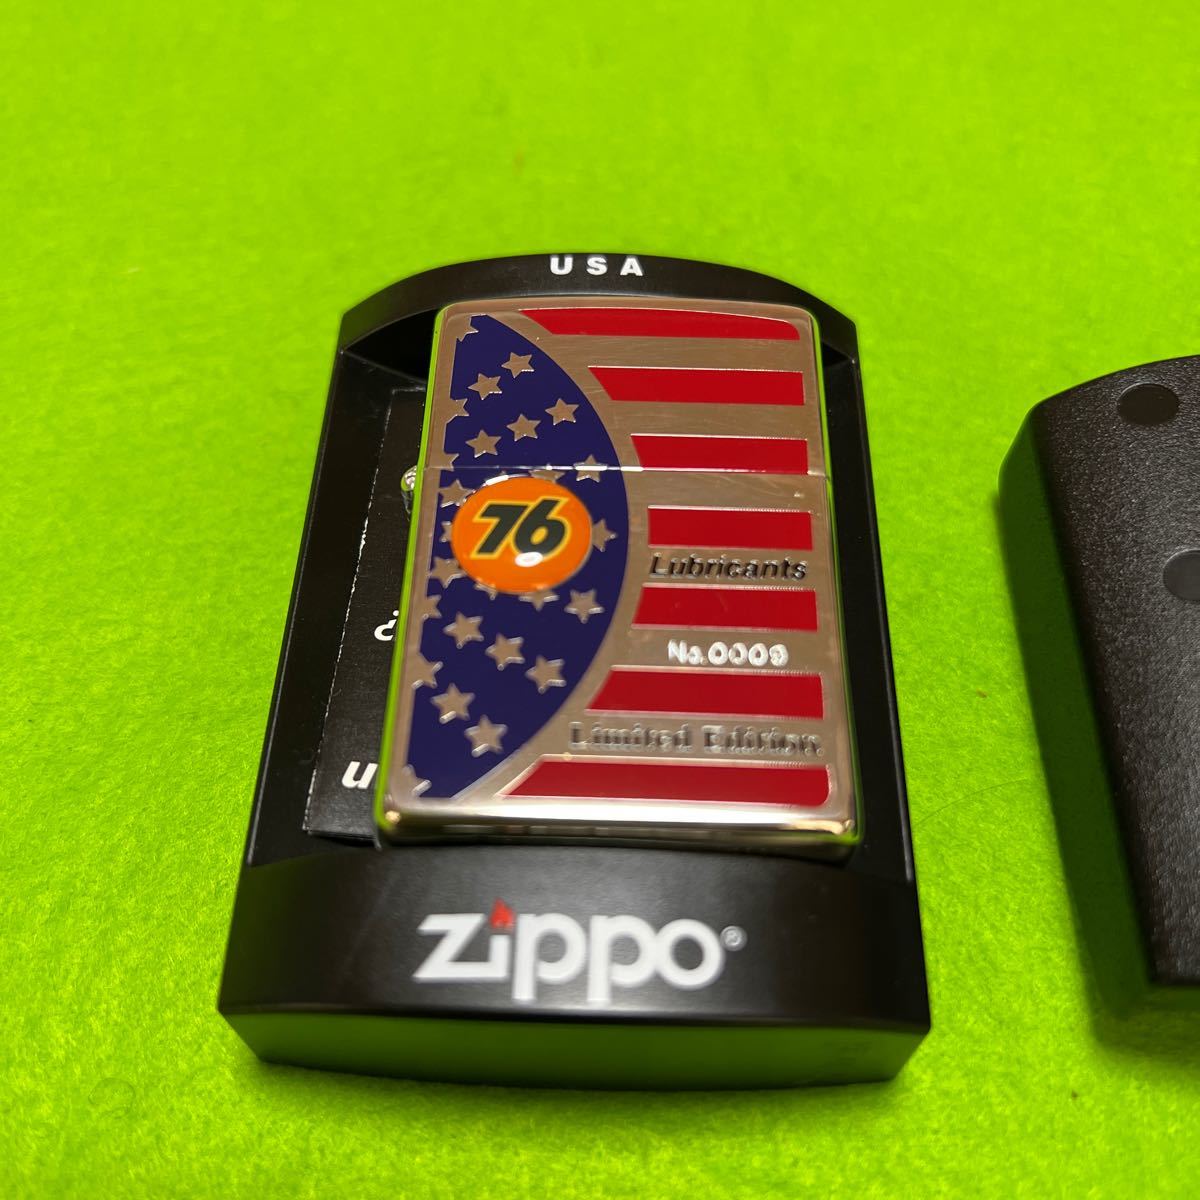 ZIPPO ジッポー Lubricant s Limited Edition No.0009 未使用品